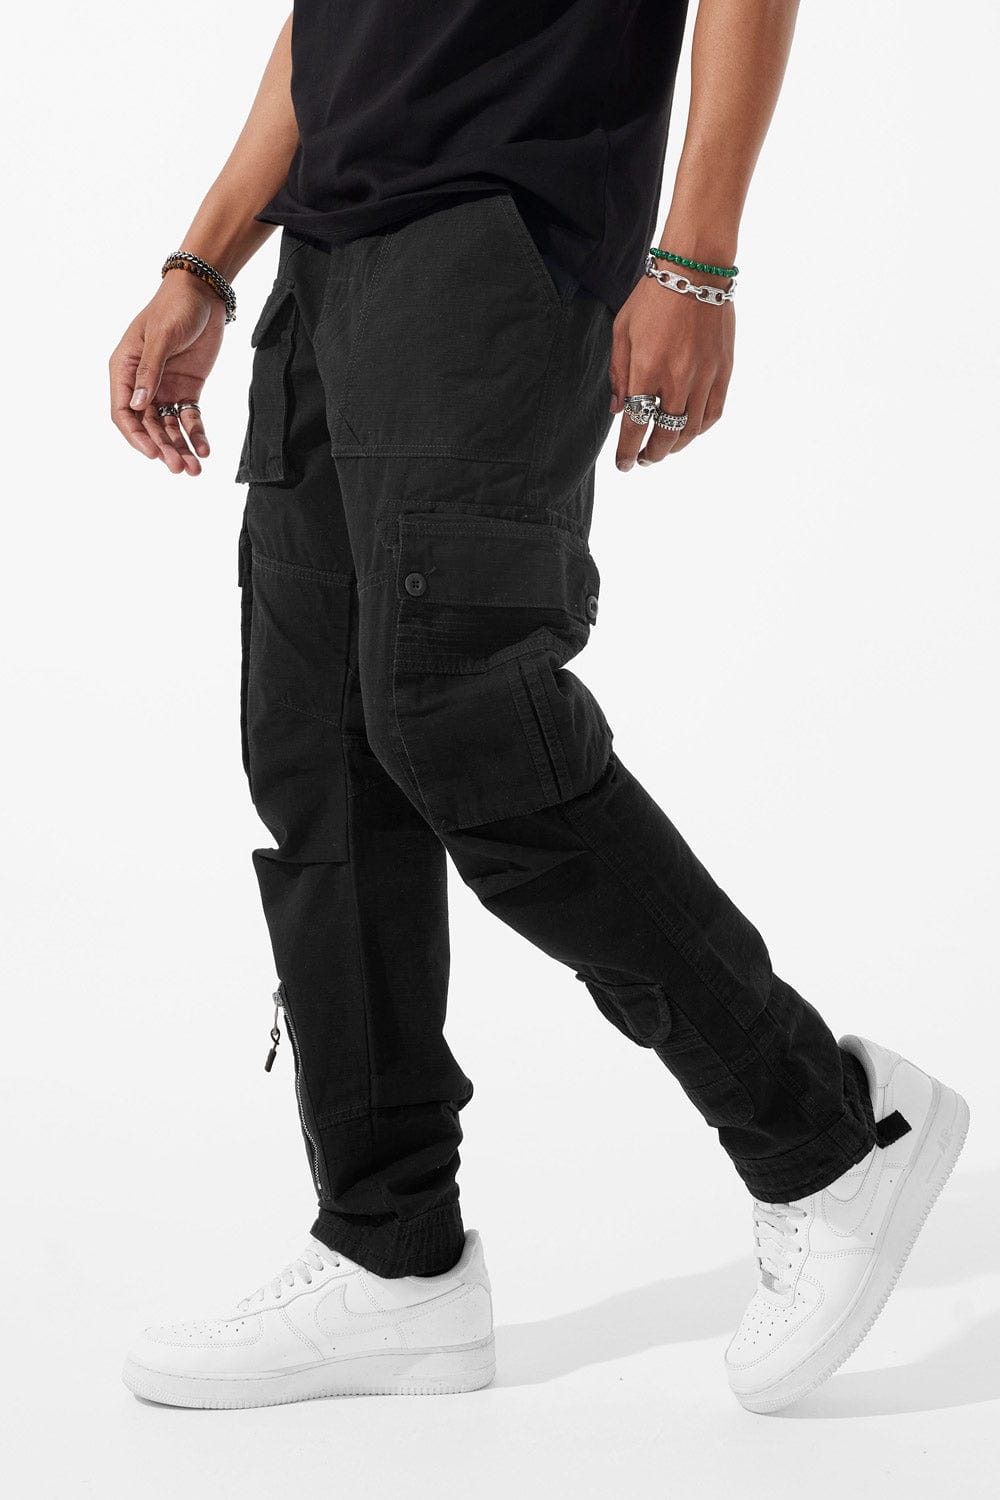 Jordan Craig Xavier - Divinity Cargo Pants (Black)